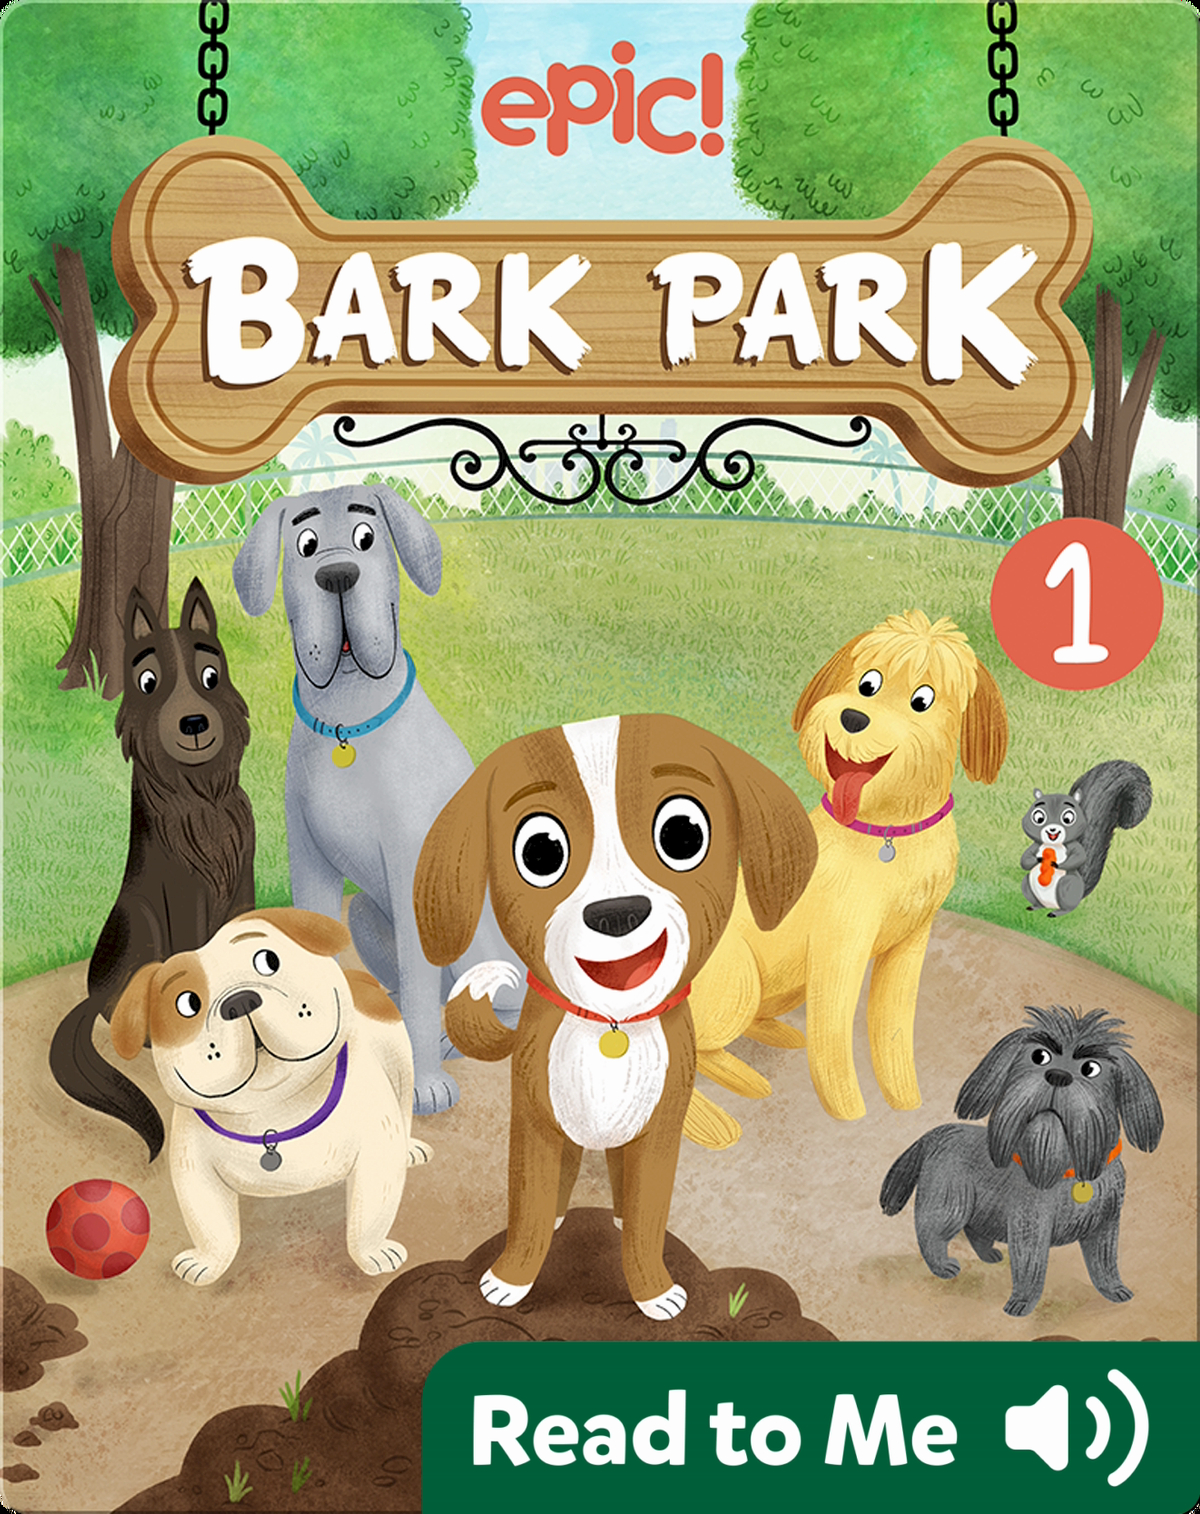 Bark Park: The Popped Ball Book by Brandi Dougherty